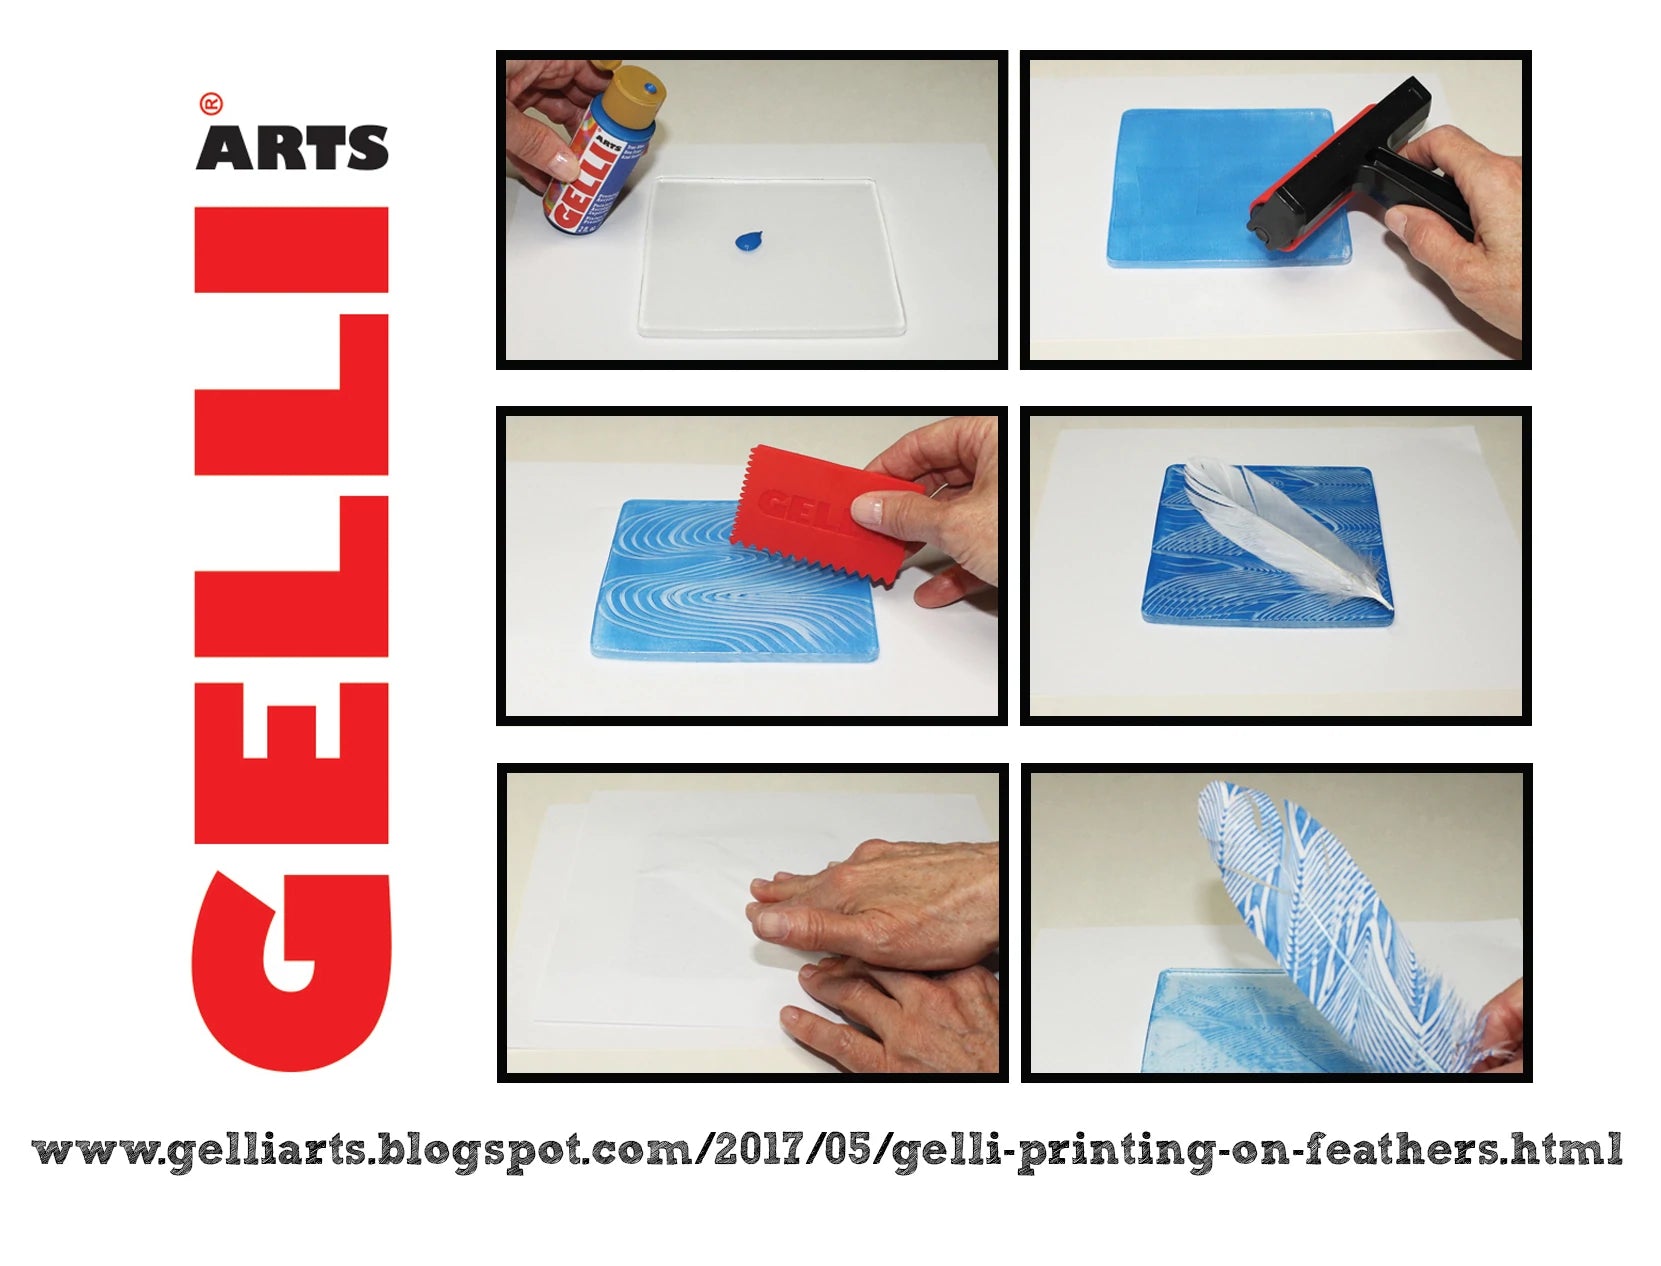 Gelli Arts Feather Printing Kit - 787 Printing Co.